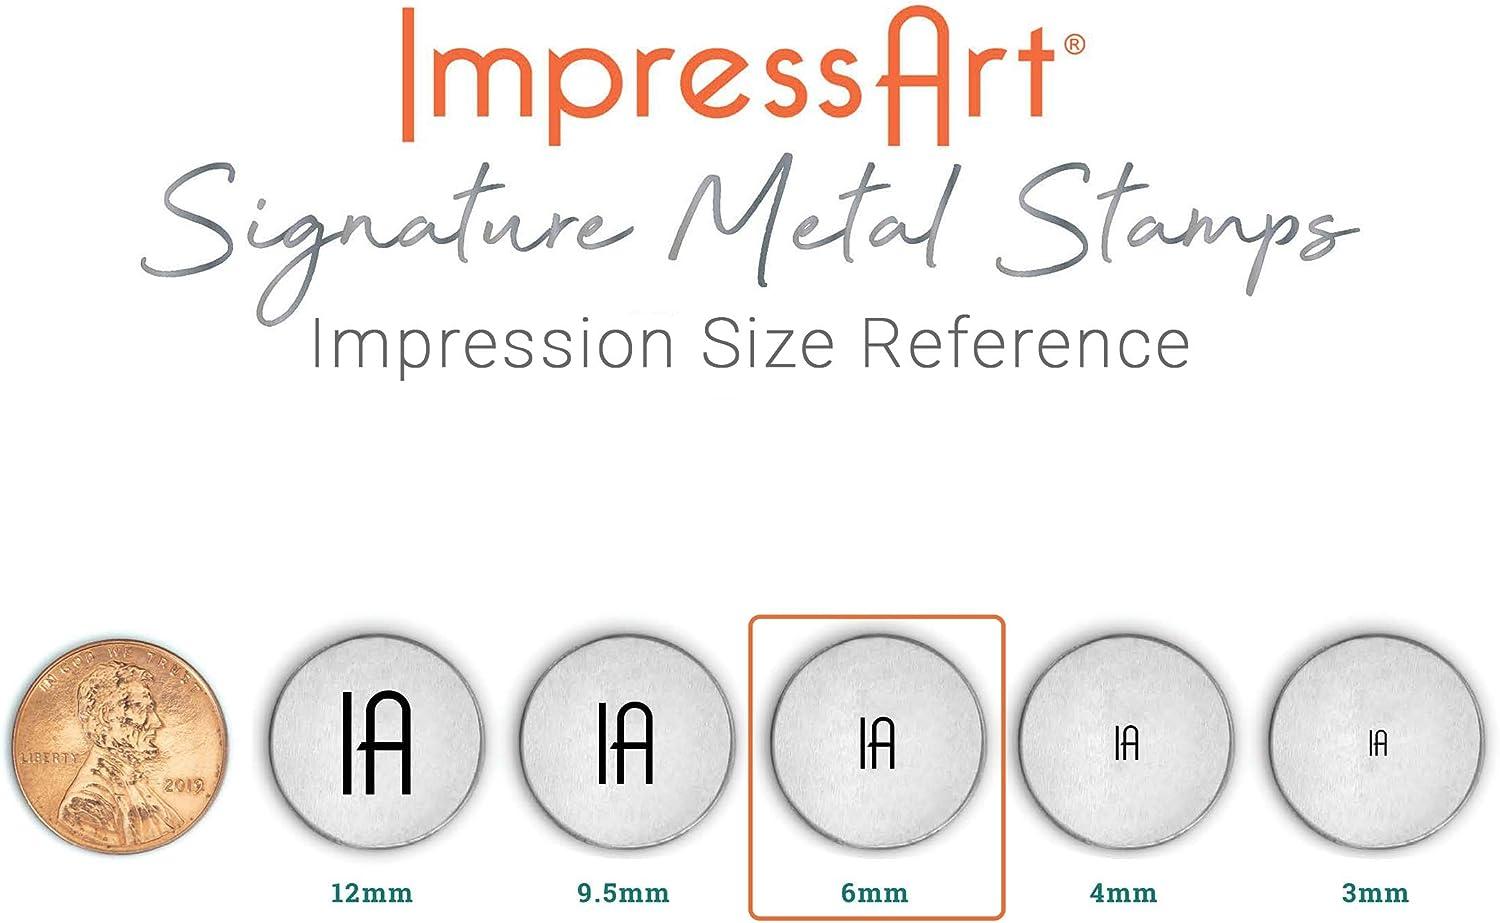 Review: ImpressArt Metal Stamps